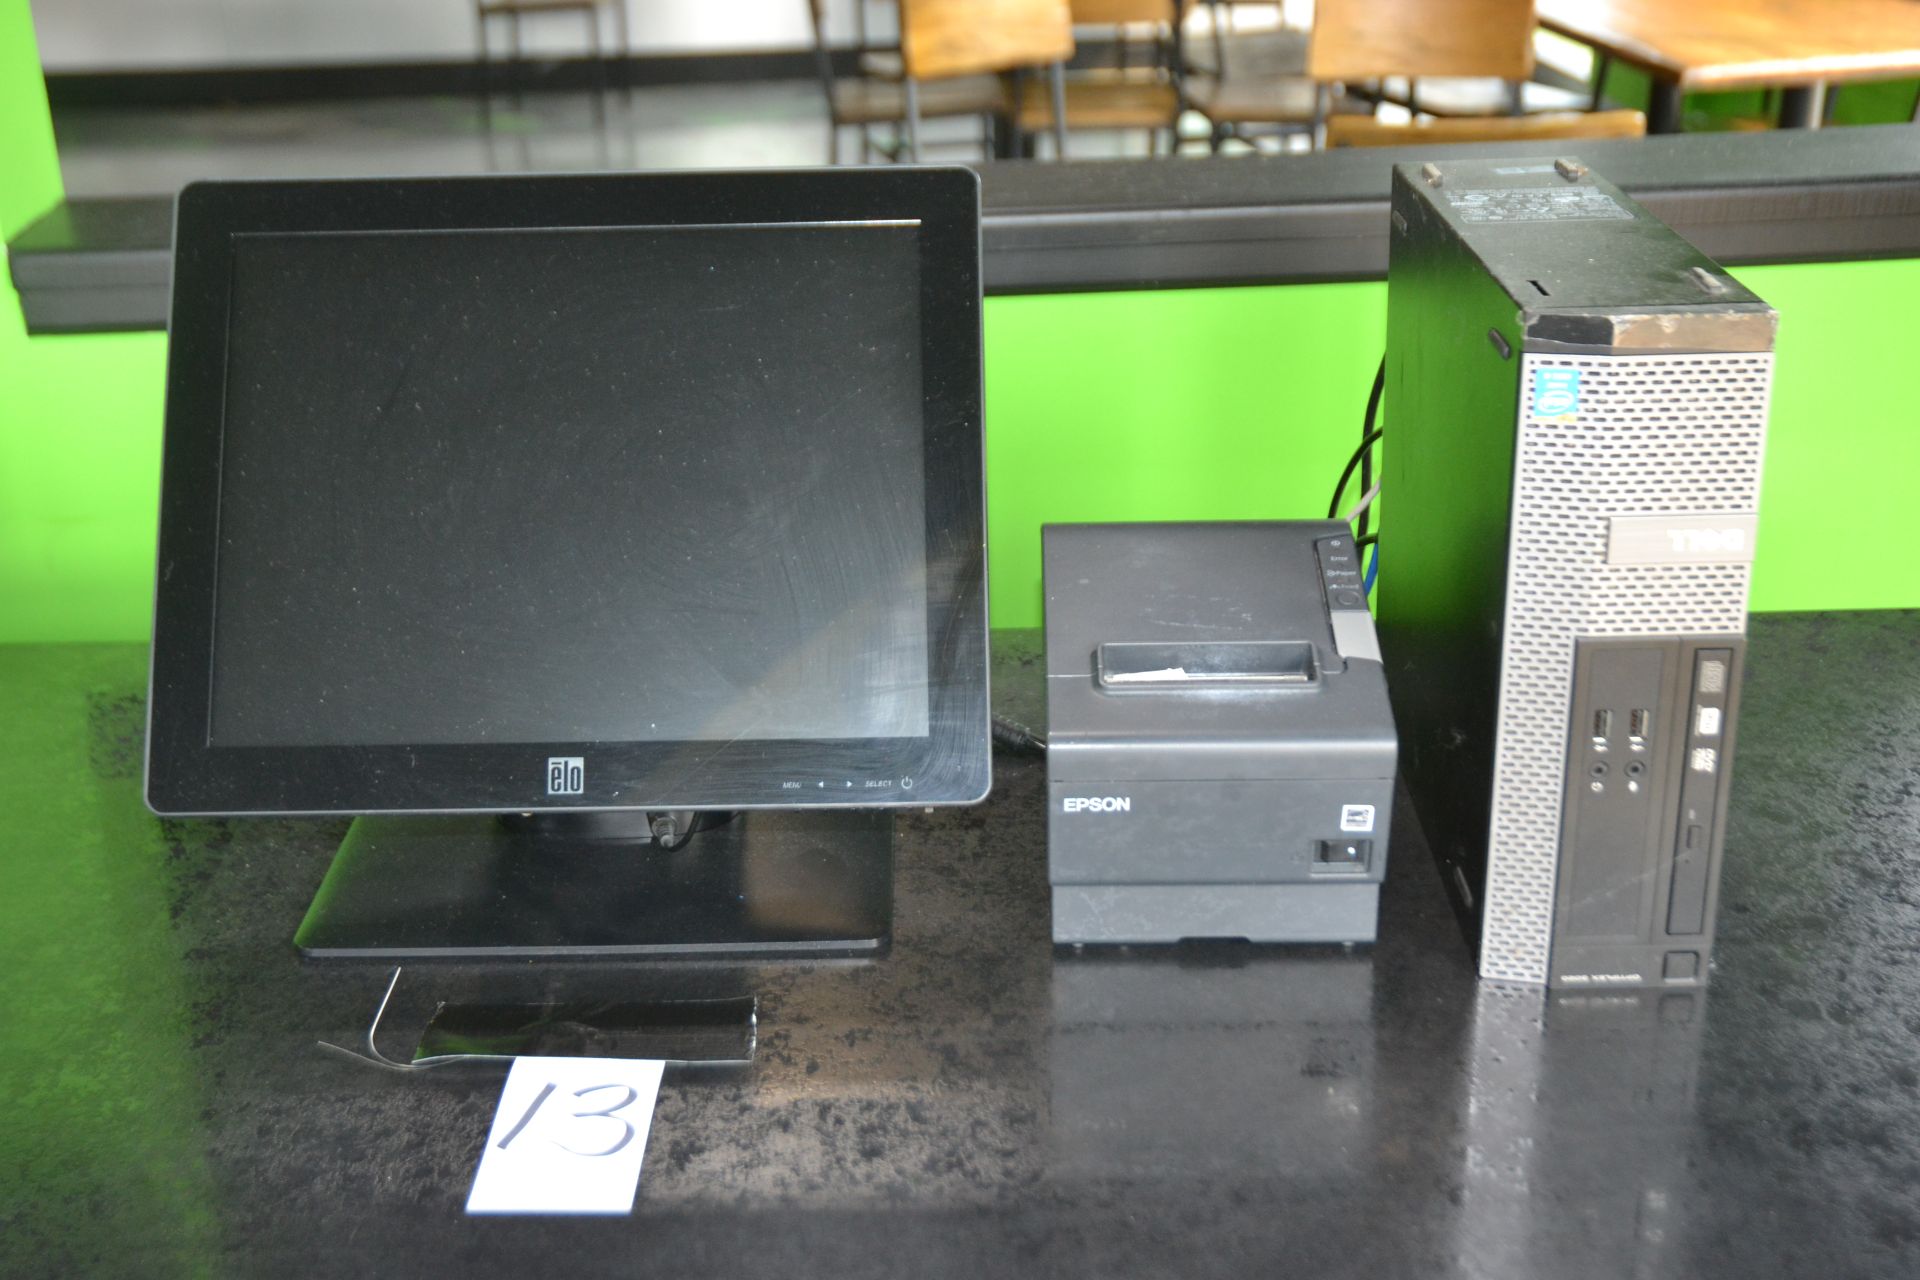 Computer Terminals consisting of: ELO Touch Screen Monitor, Epson Receipt Printer, Dell Optiplex